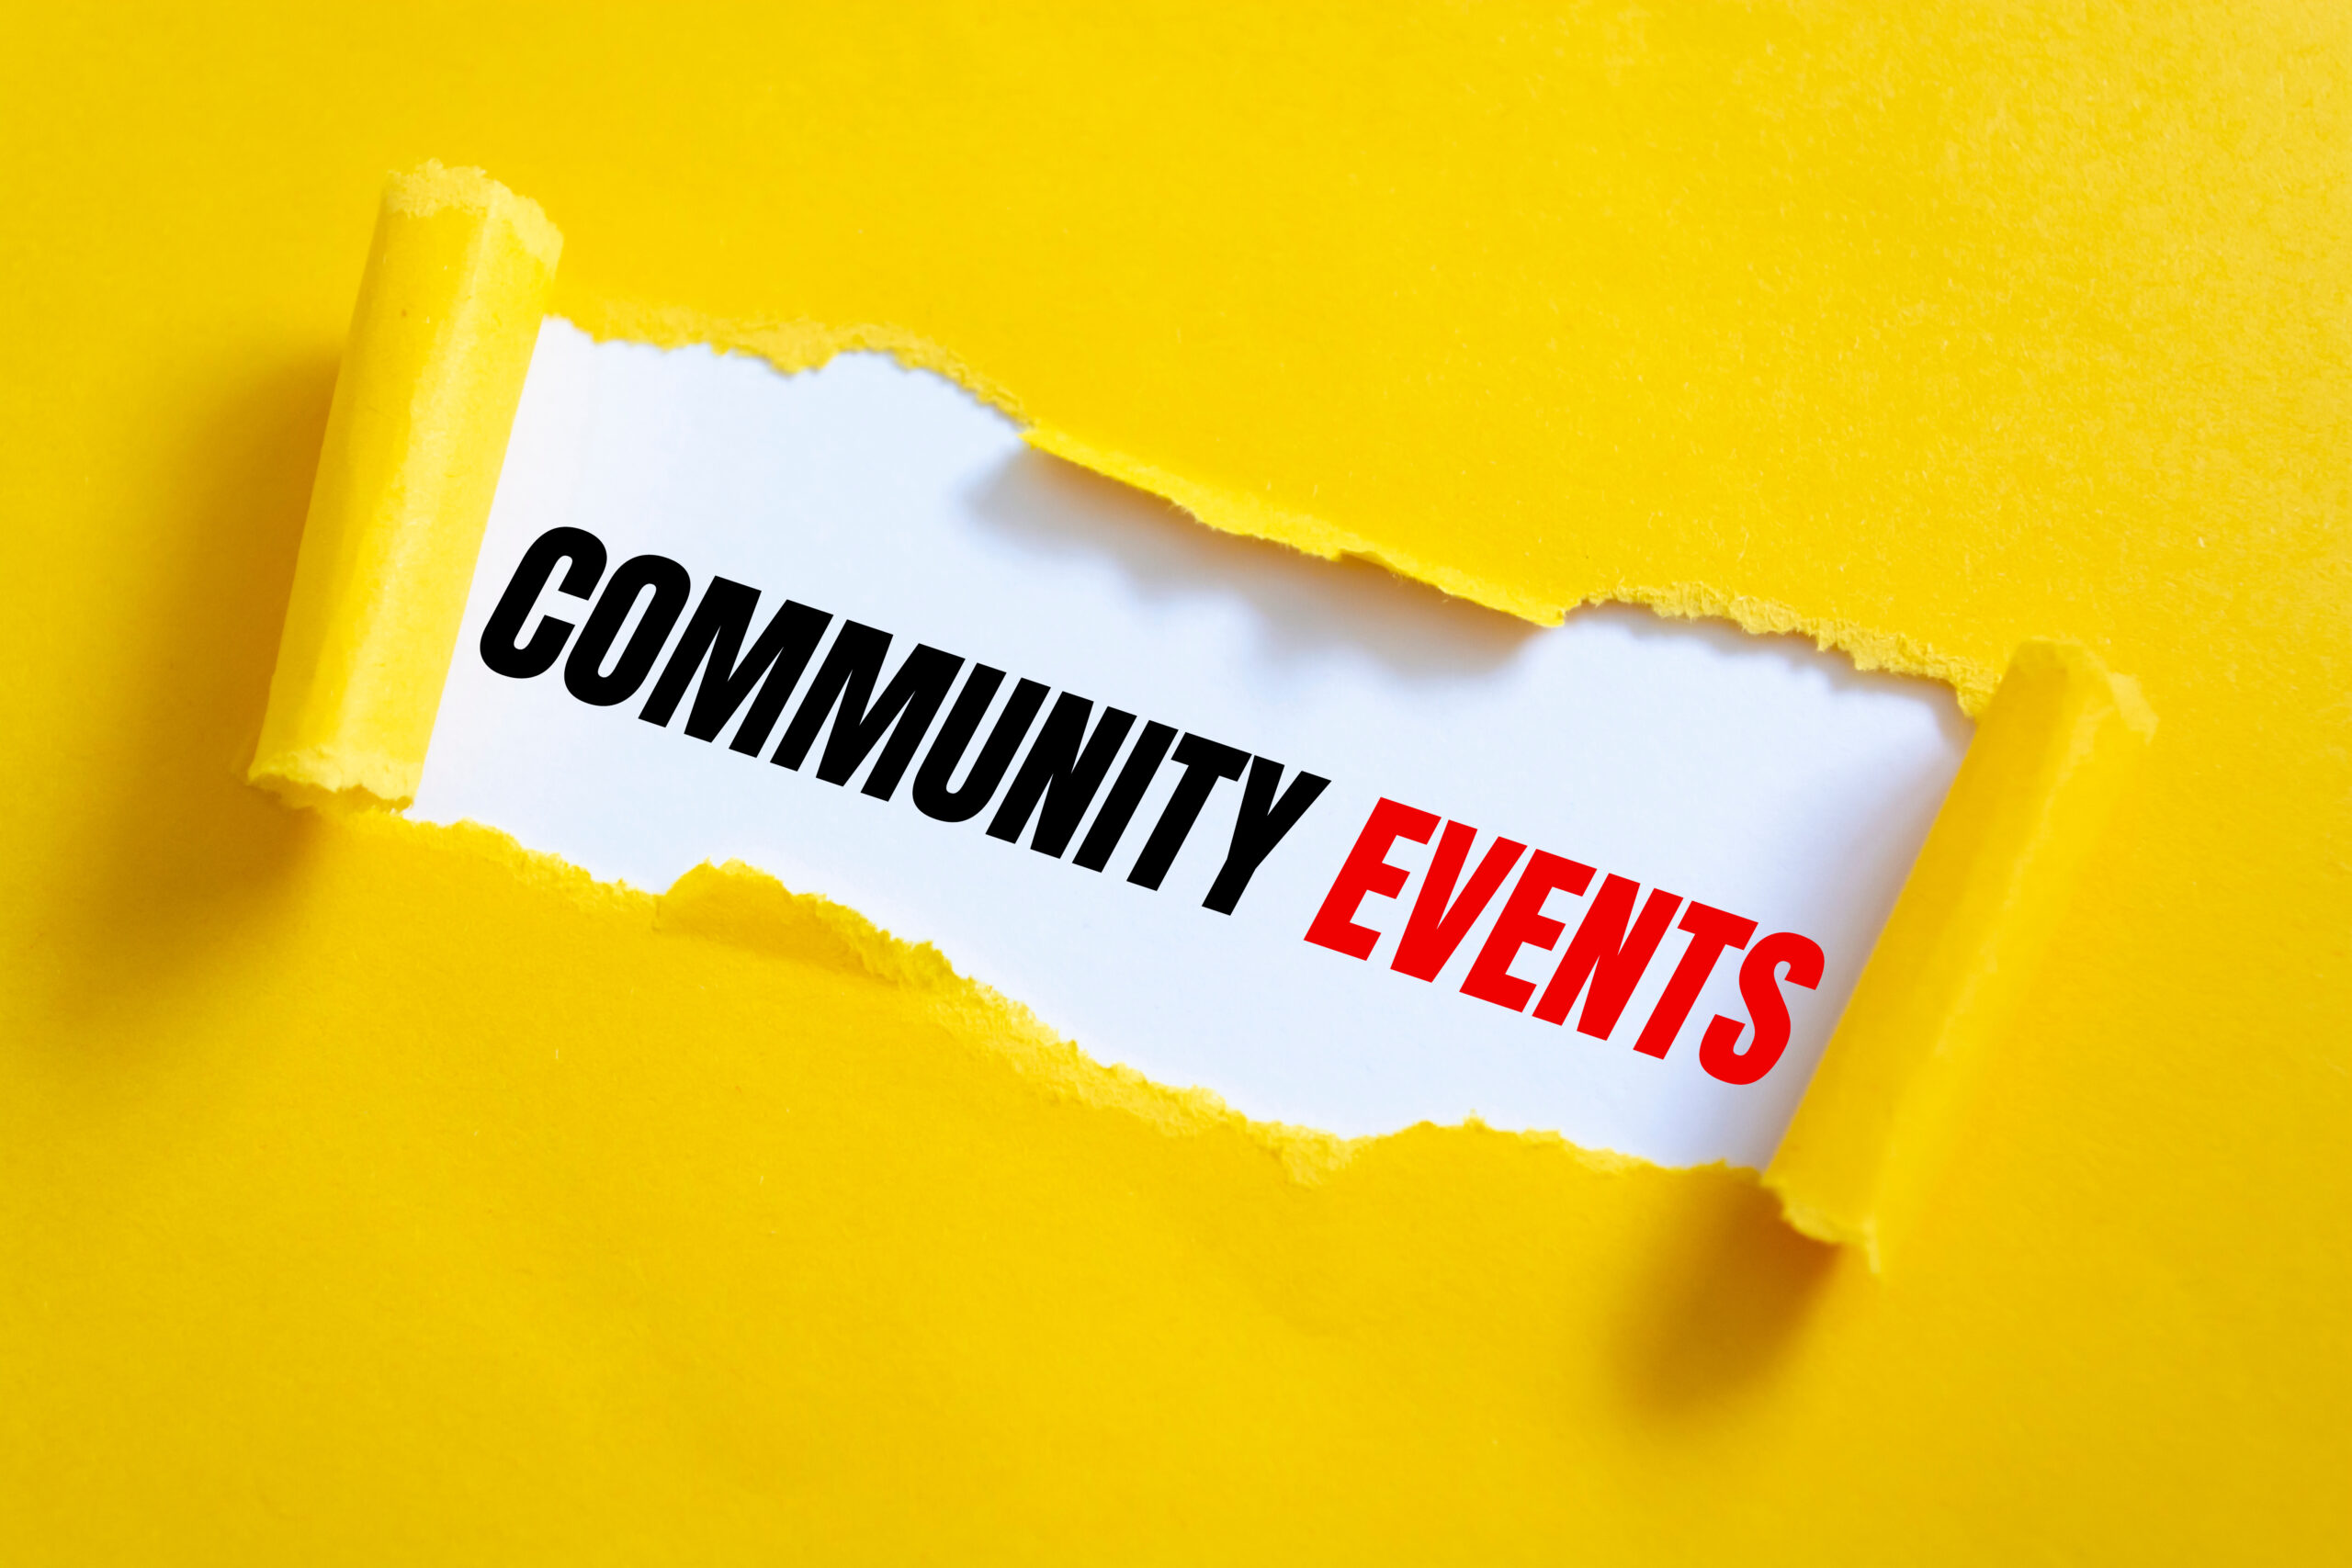 COMMUNITY NEWS & EVENTS